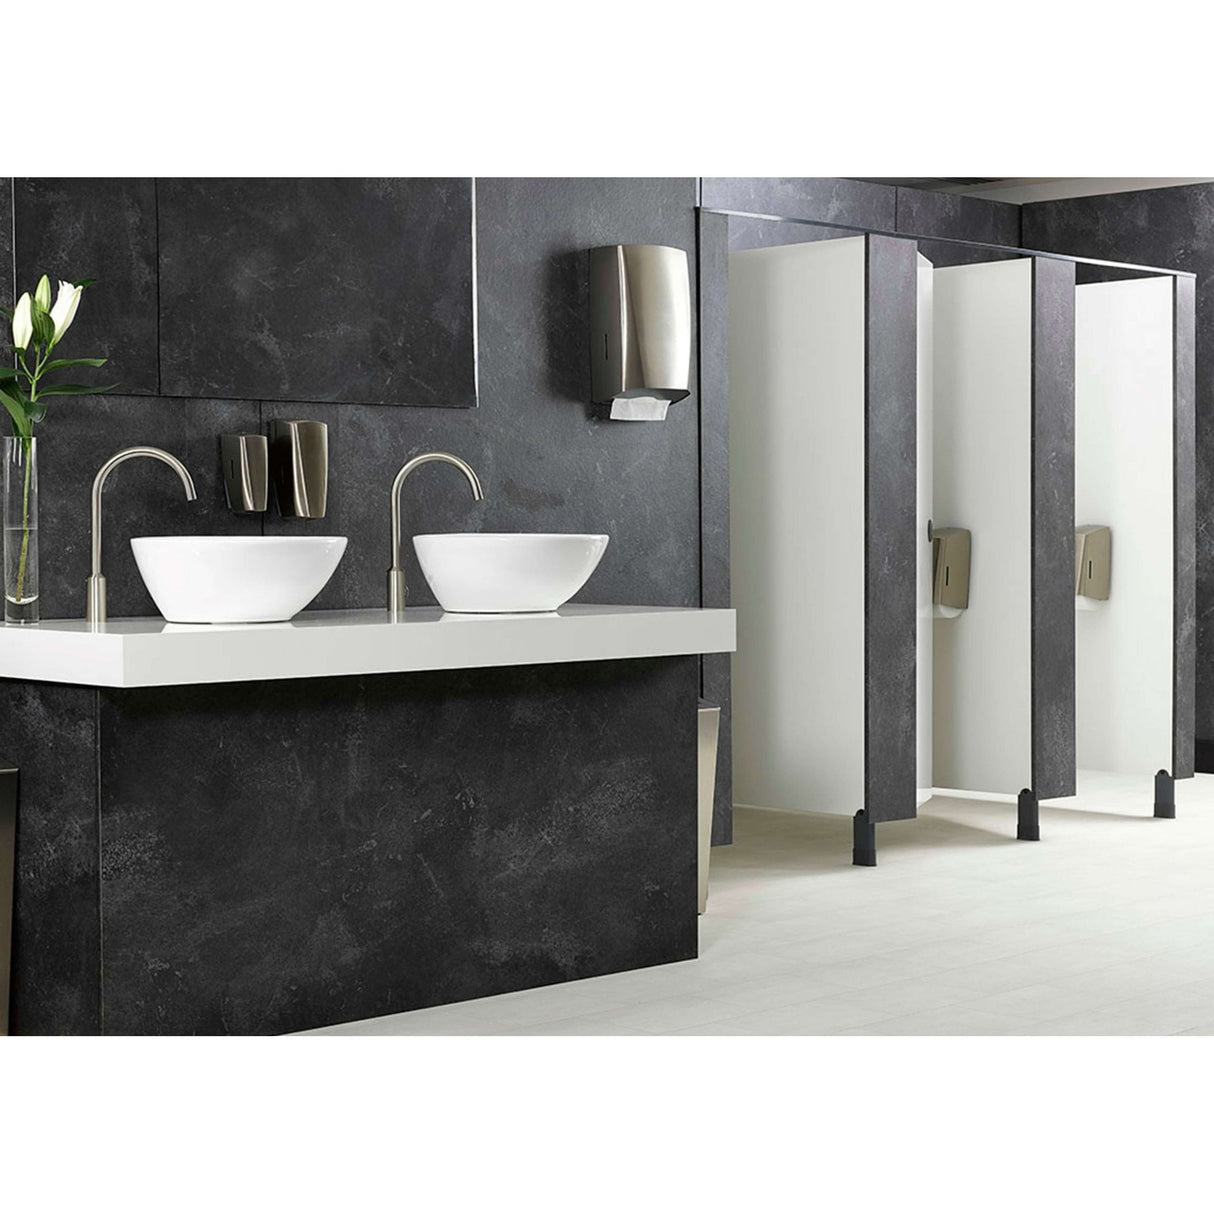 Vivo Platinum Series Double Cored ‘Pendamatic’ Type Toilet Roll Holder